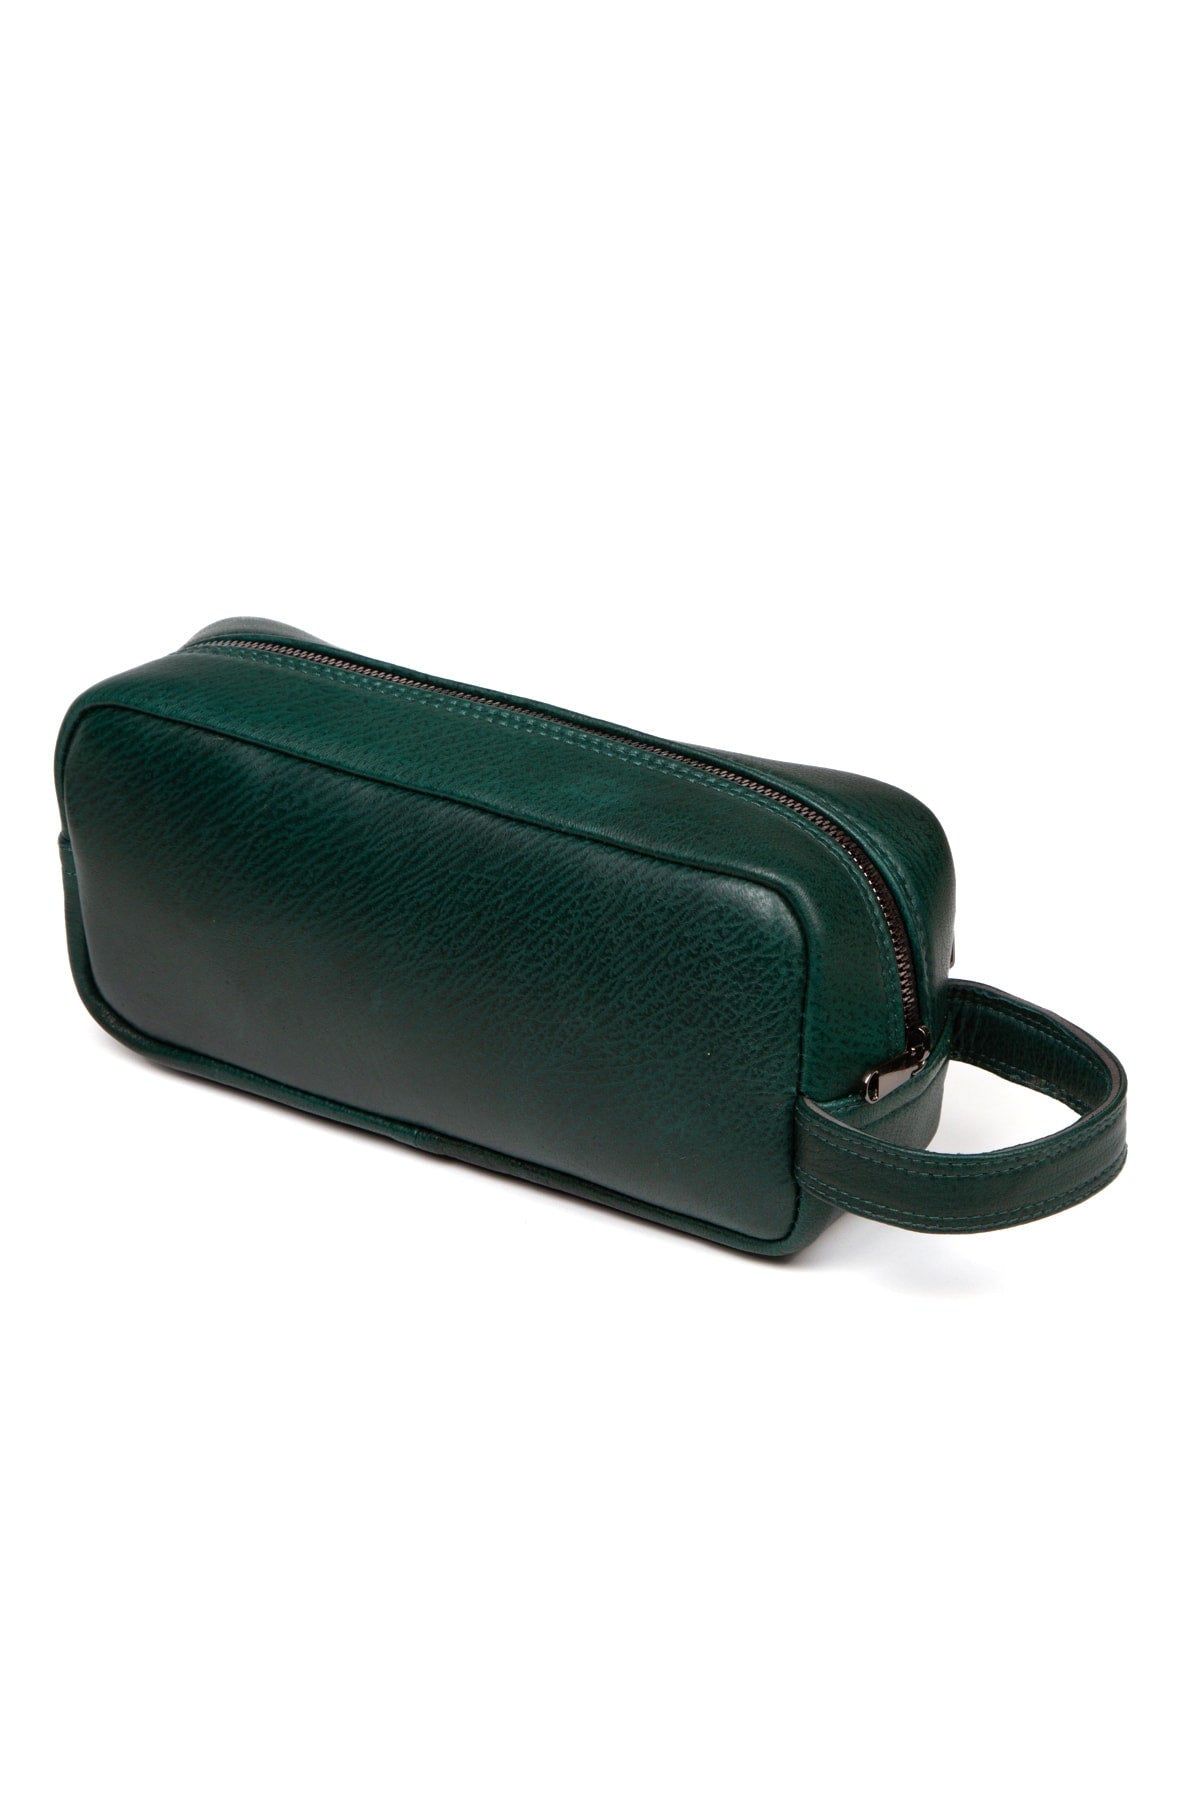 Genuine Leather Shaving Bag Daily Travel Cosmetic Handbag Men Khaki Bag (26x13cm)